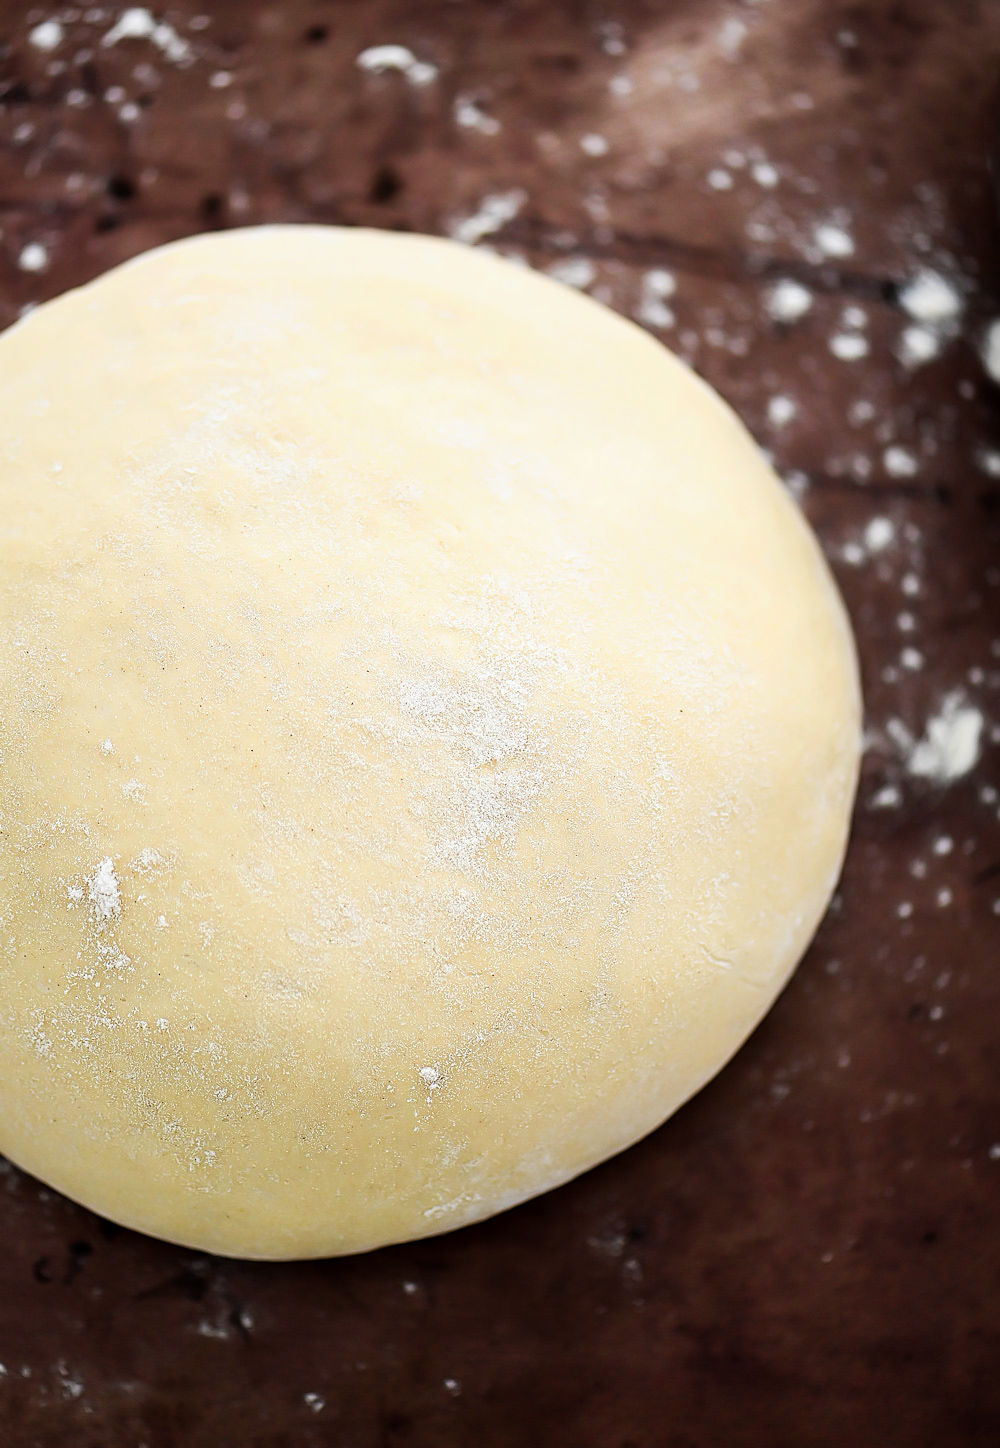 A delicious homemade pizza dough. Life-in-the-Lofthouse.com